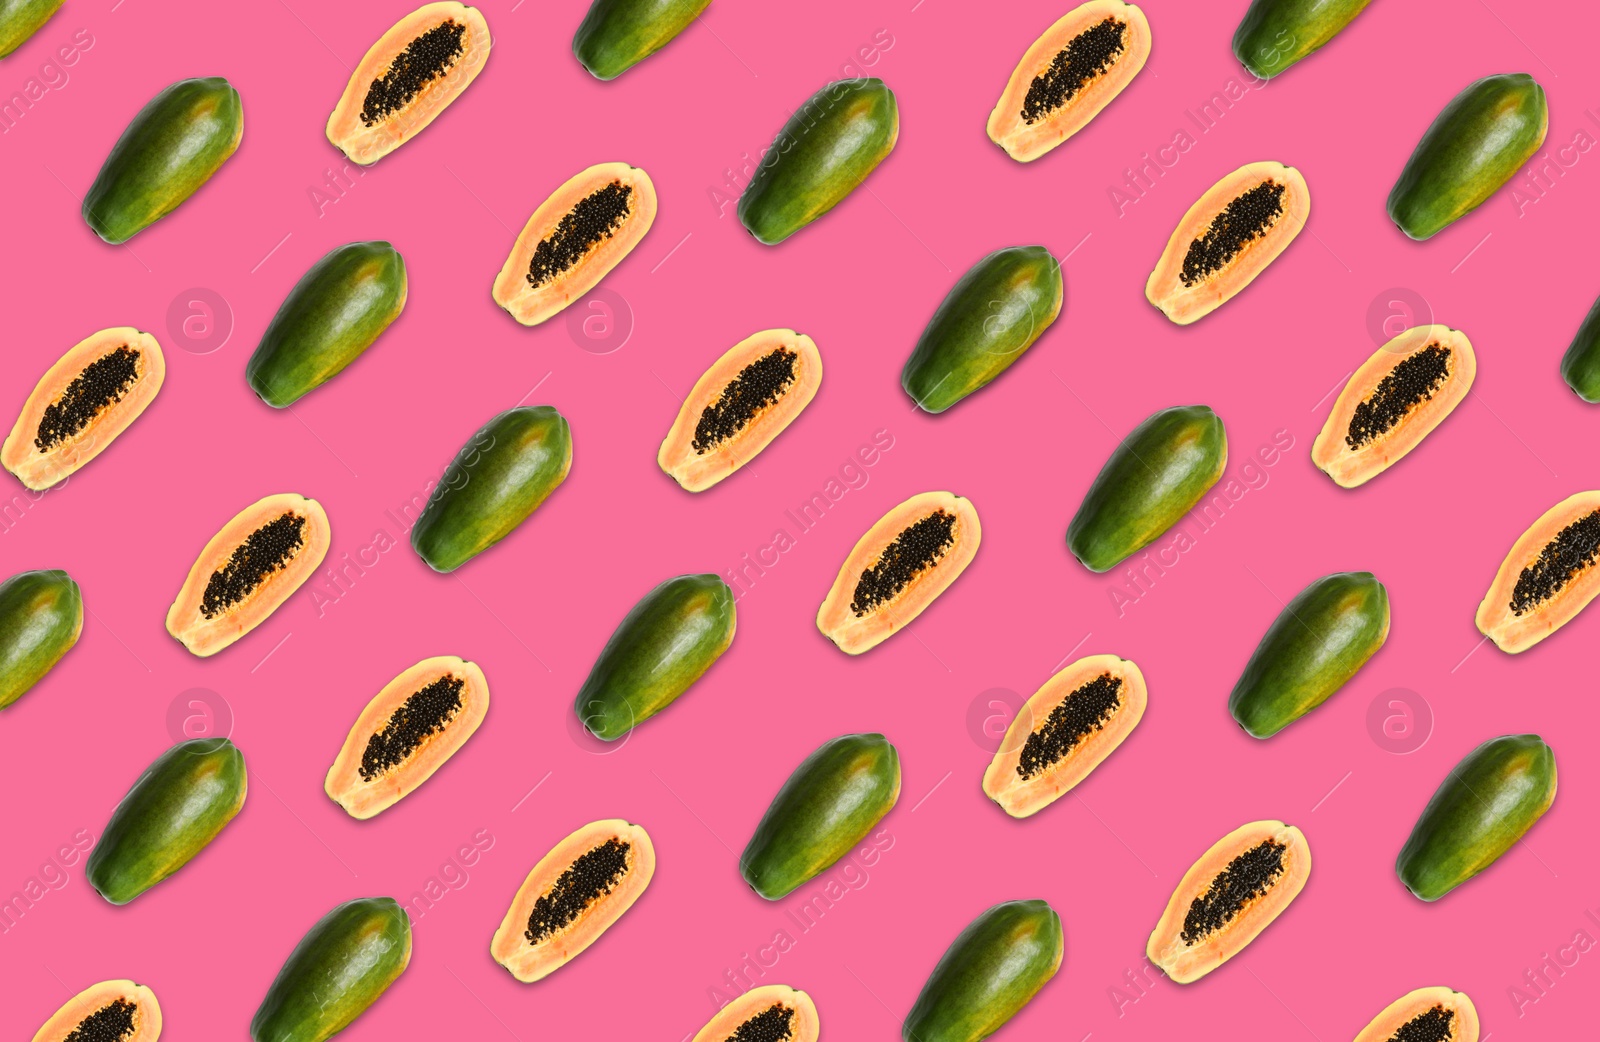 Image of Pattern of whole and halved papaya fruits on pink background